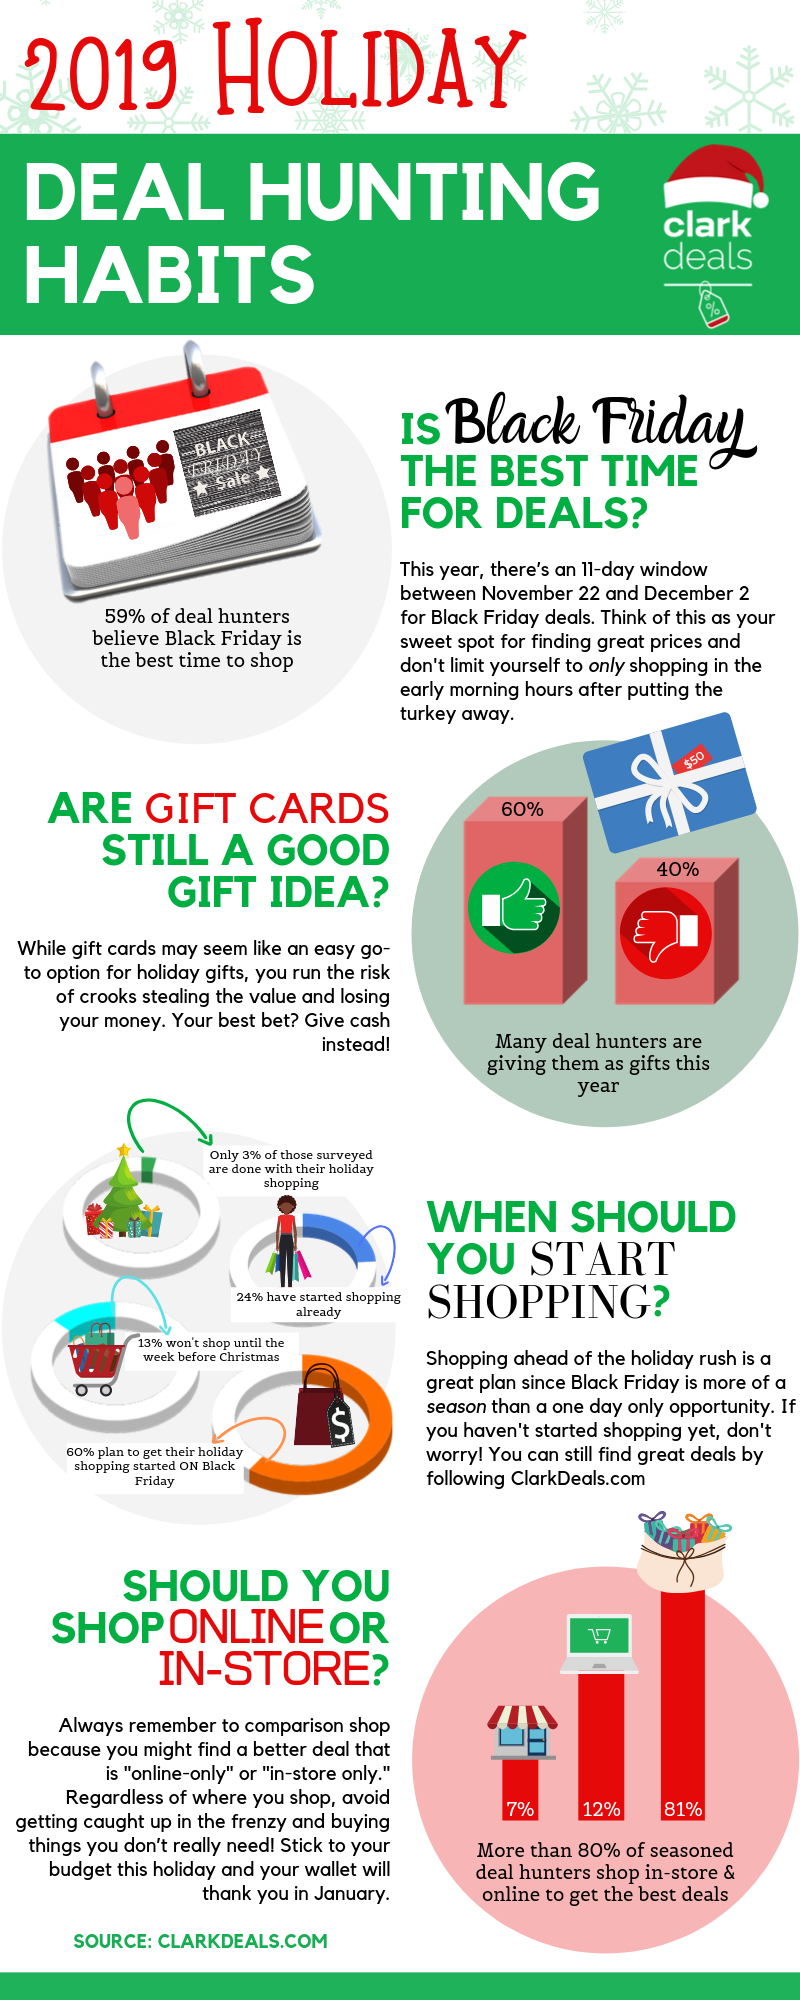 Clark Deals holiday shopping survey